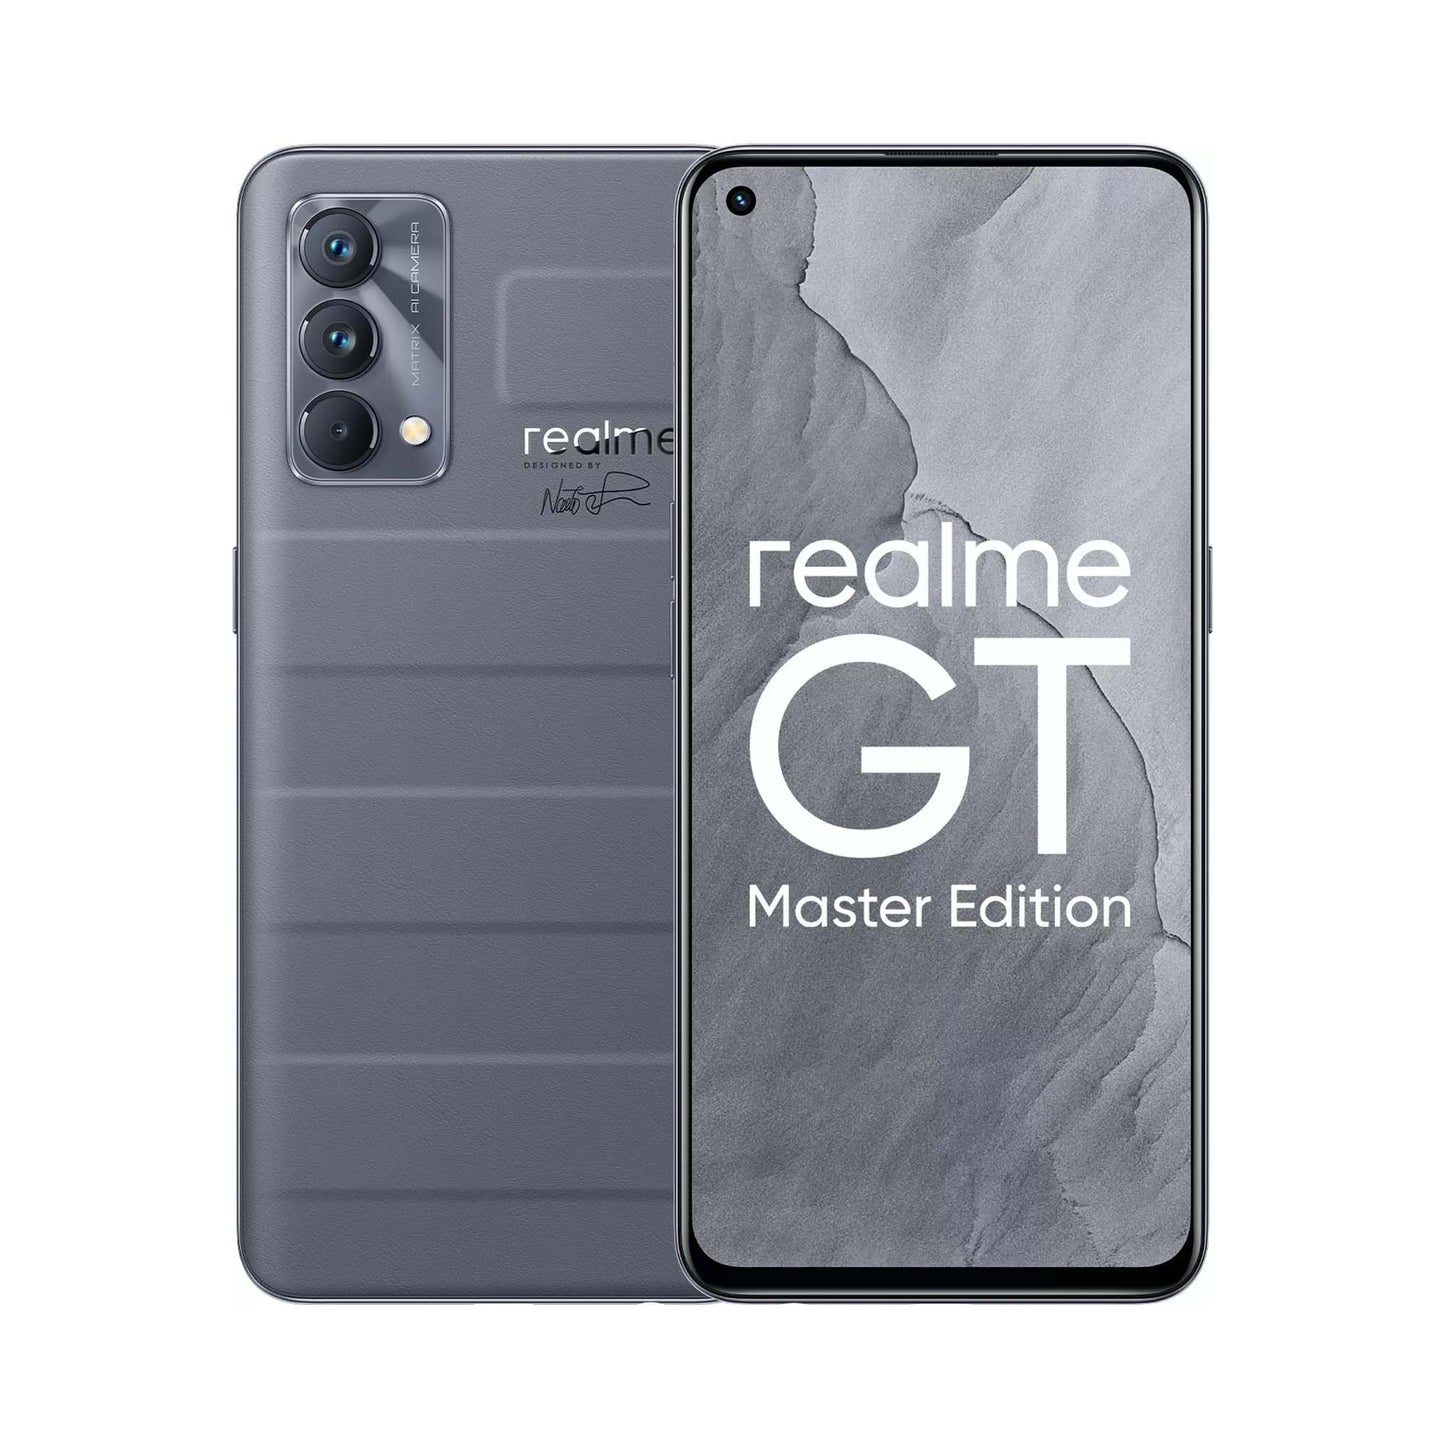 Realme GT Master Edition 5G